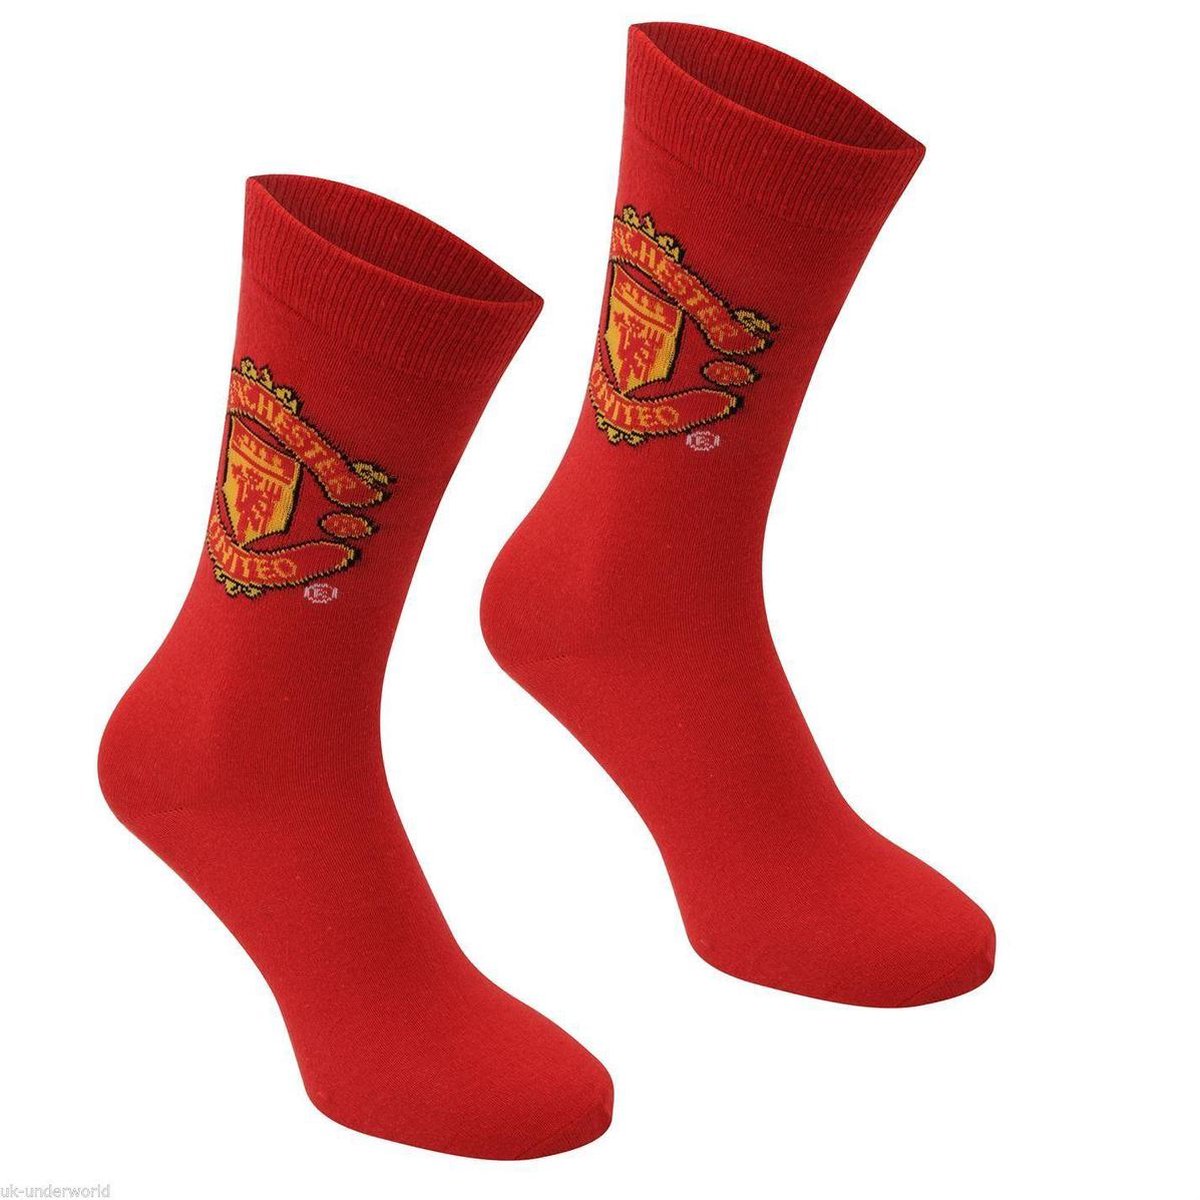 United sokken - rood met embleem maat 39 tot 46 | bol.com